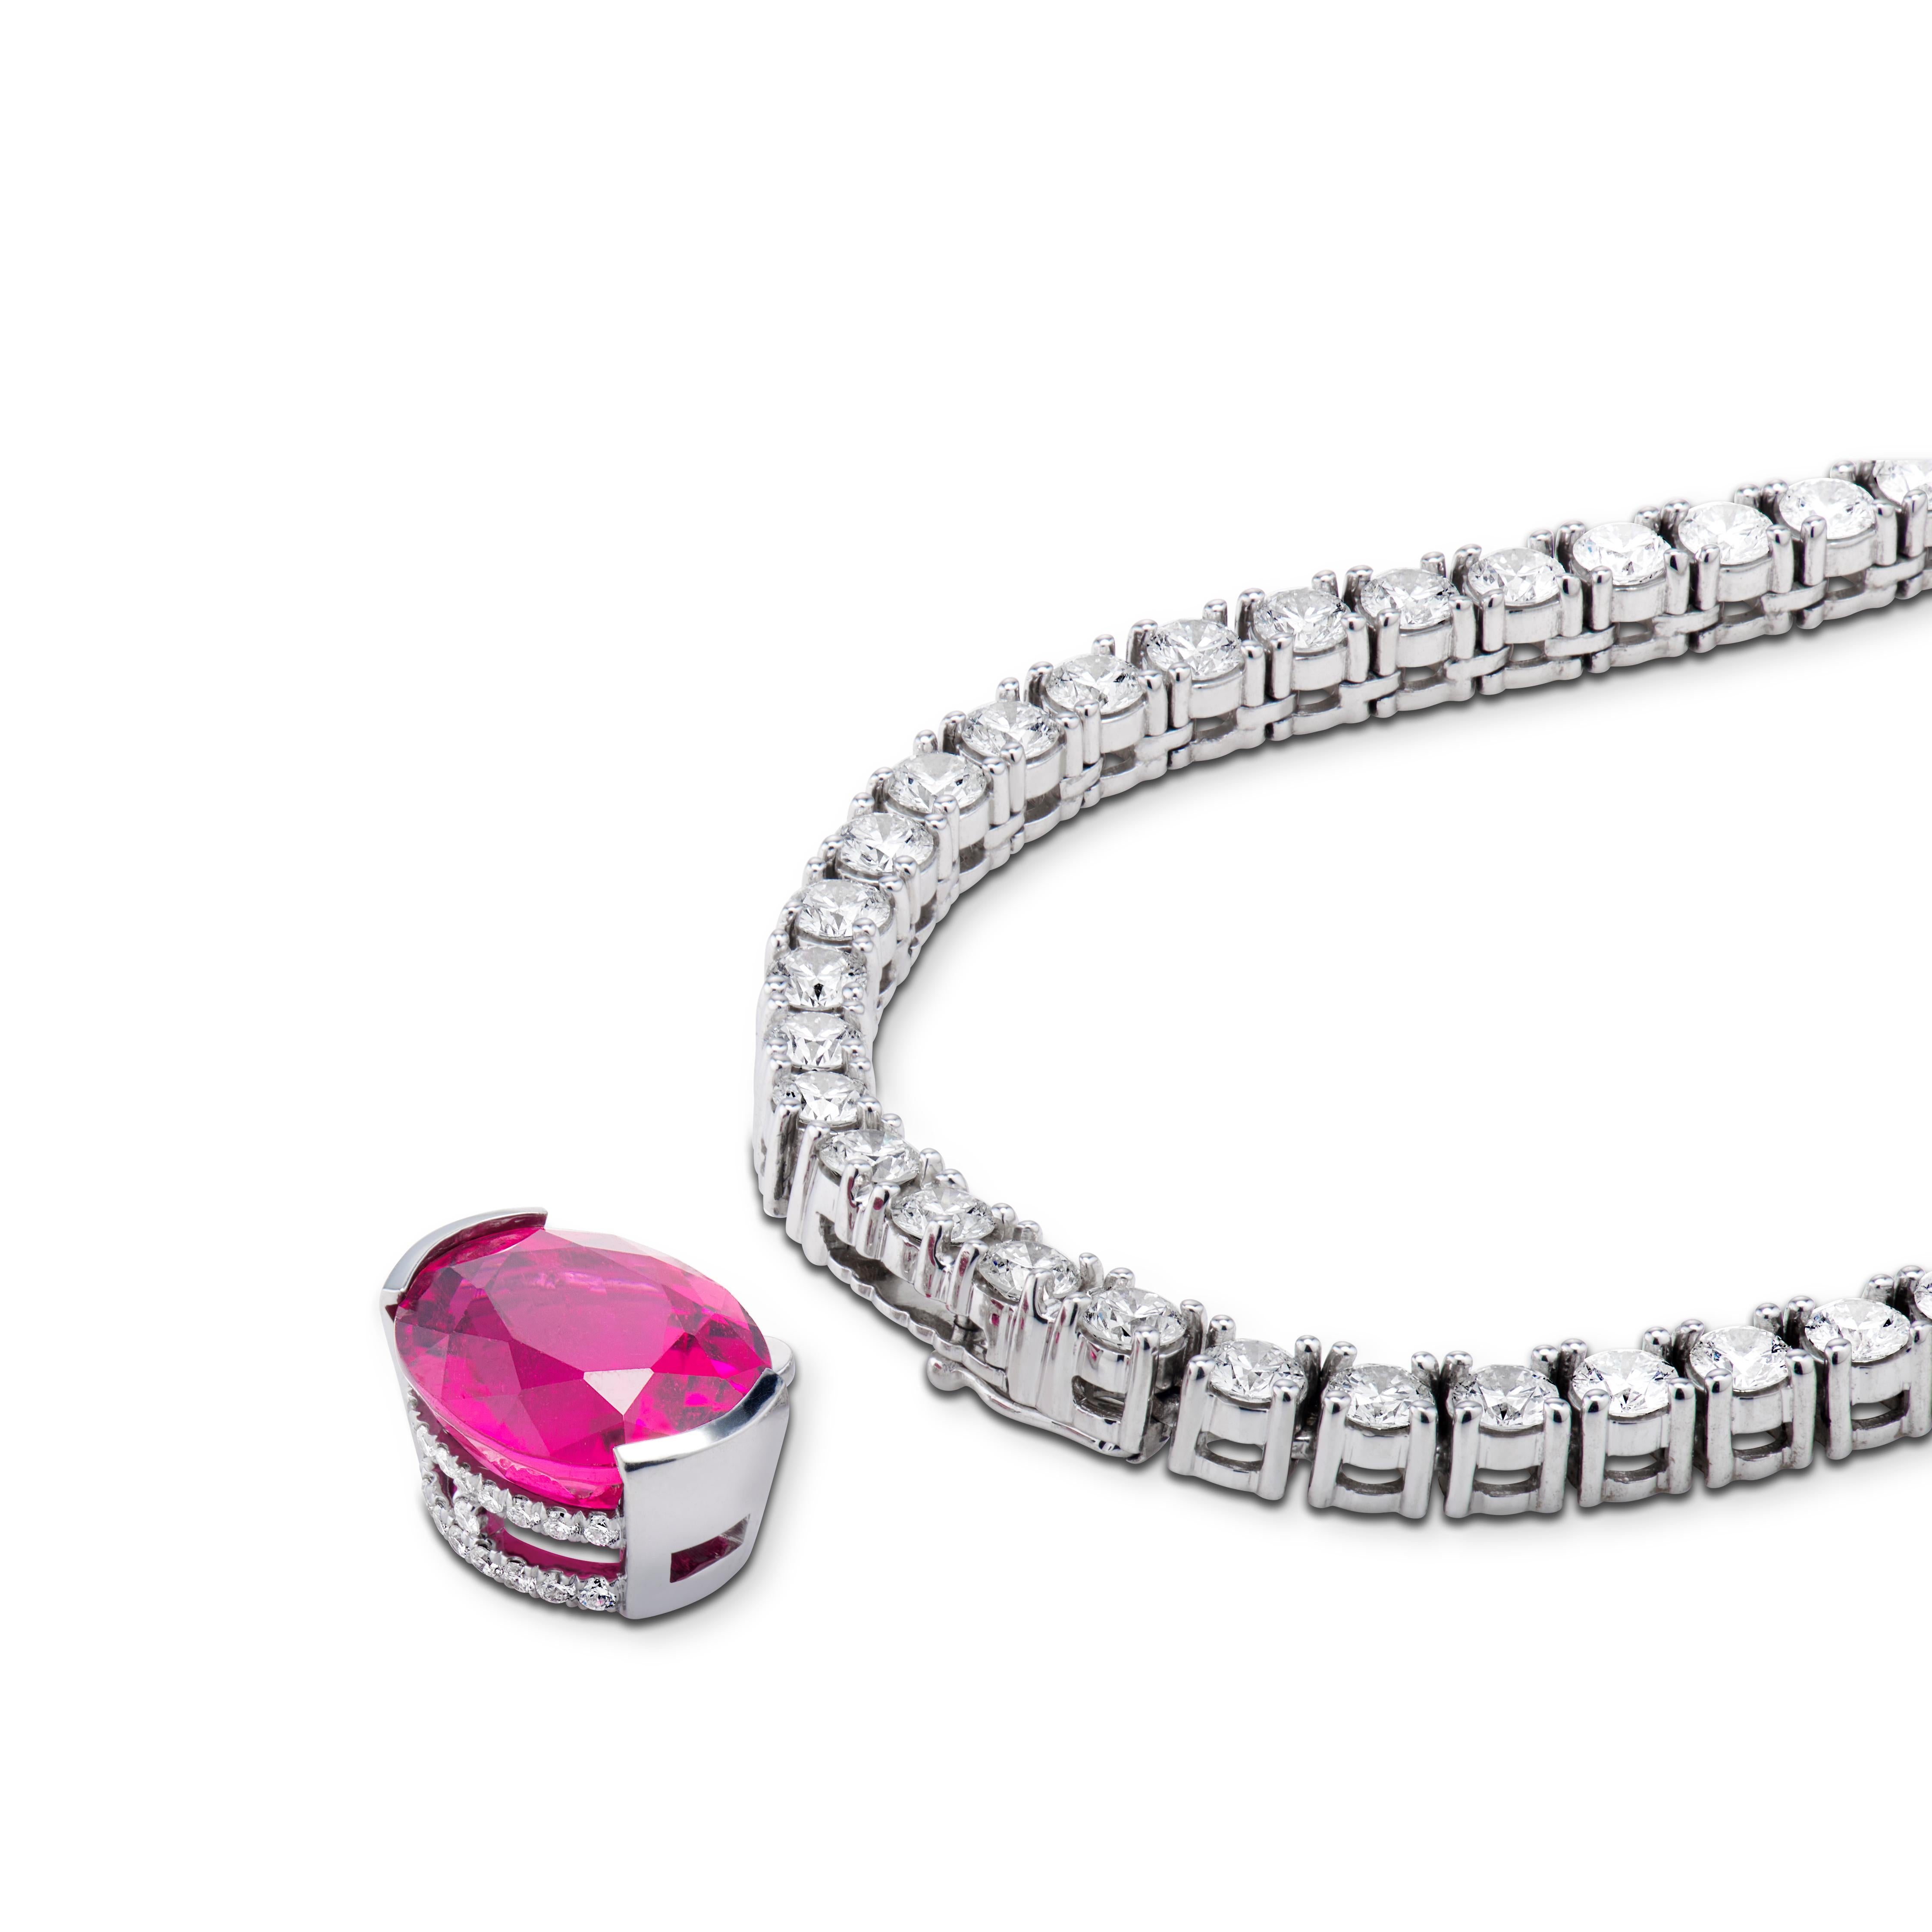 Modern Diamond Tennis Necklace with Detachable 4.11 Carat Rubellite Tourmaline Pendant For Sale